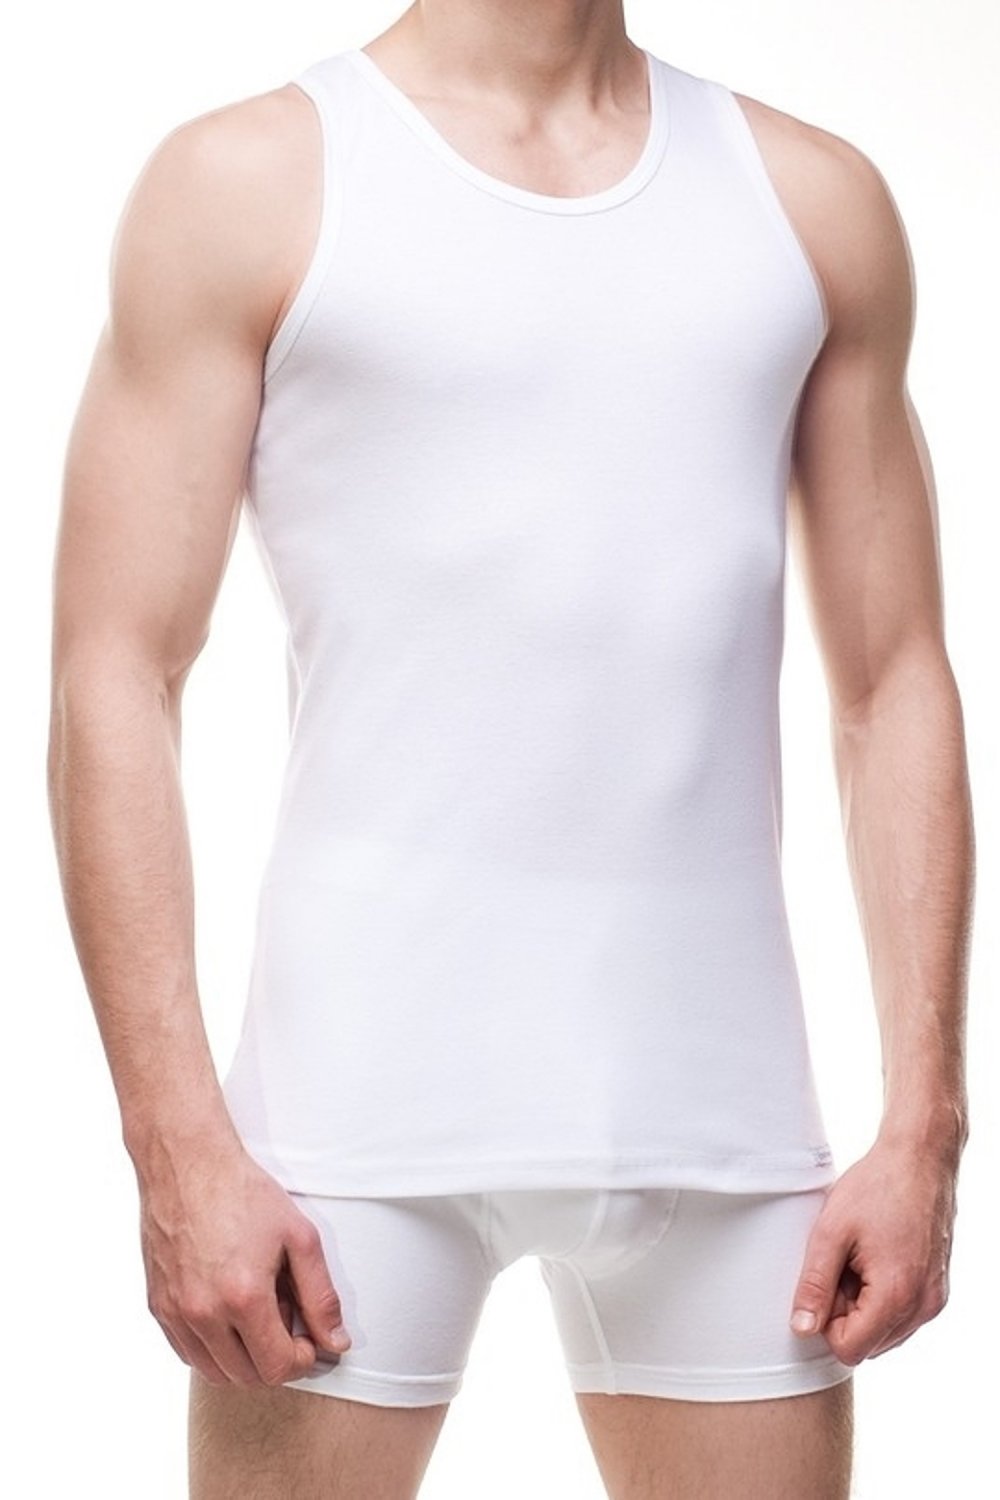 E-shop Pánske tričko 213 Authentic white plus